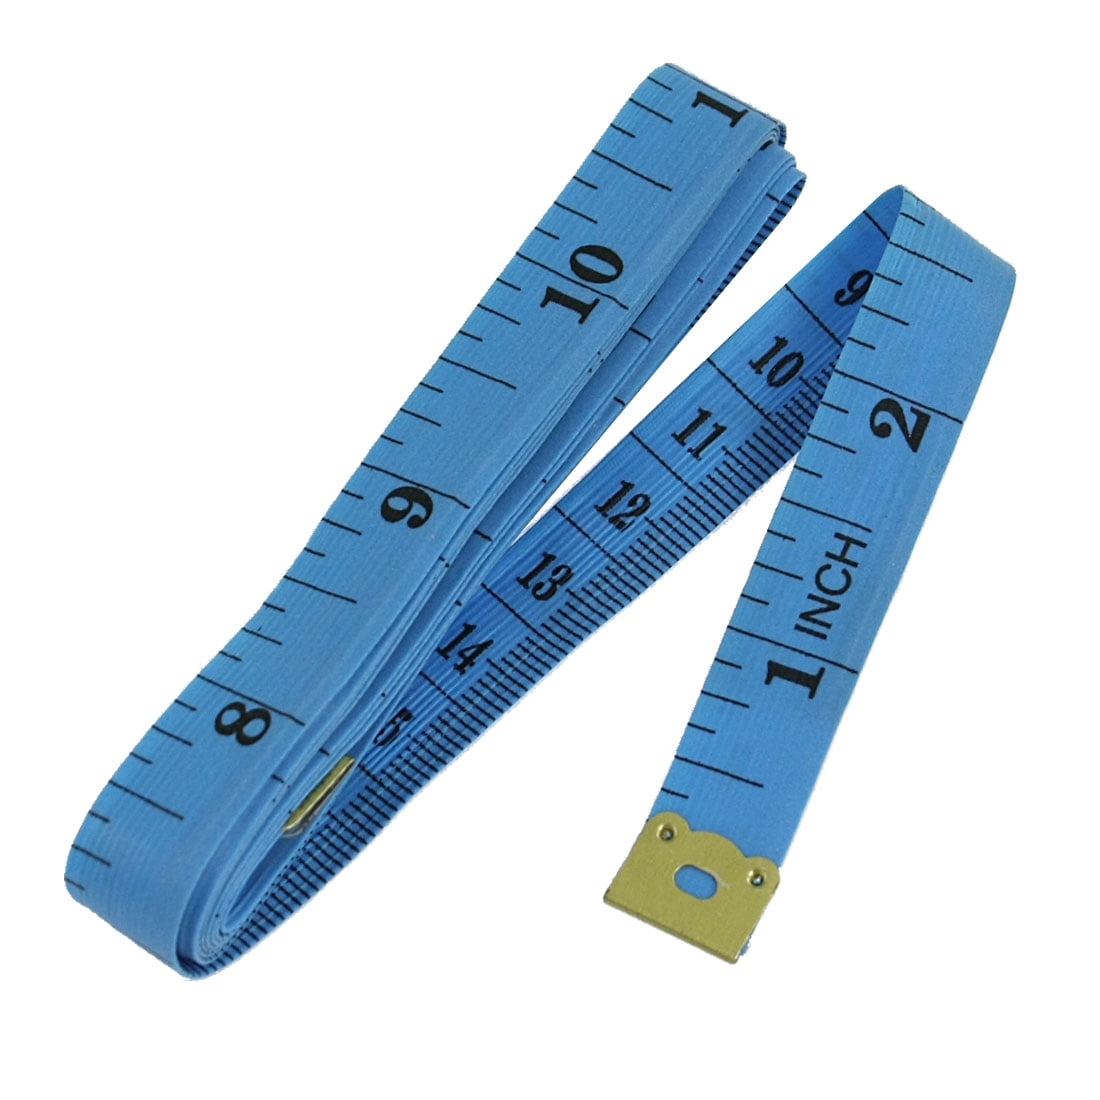 Tailor Measuring Tape 60 - AngularByDesign LLC